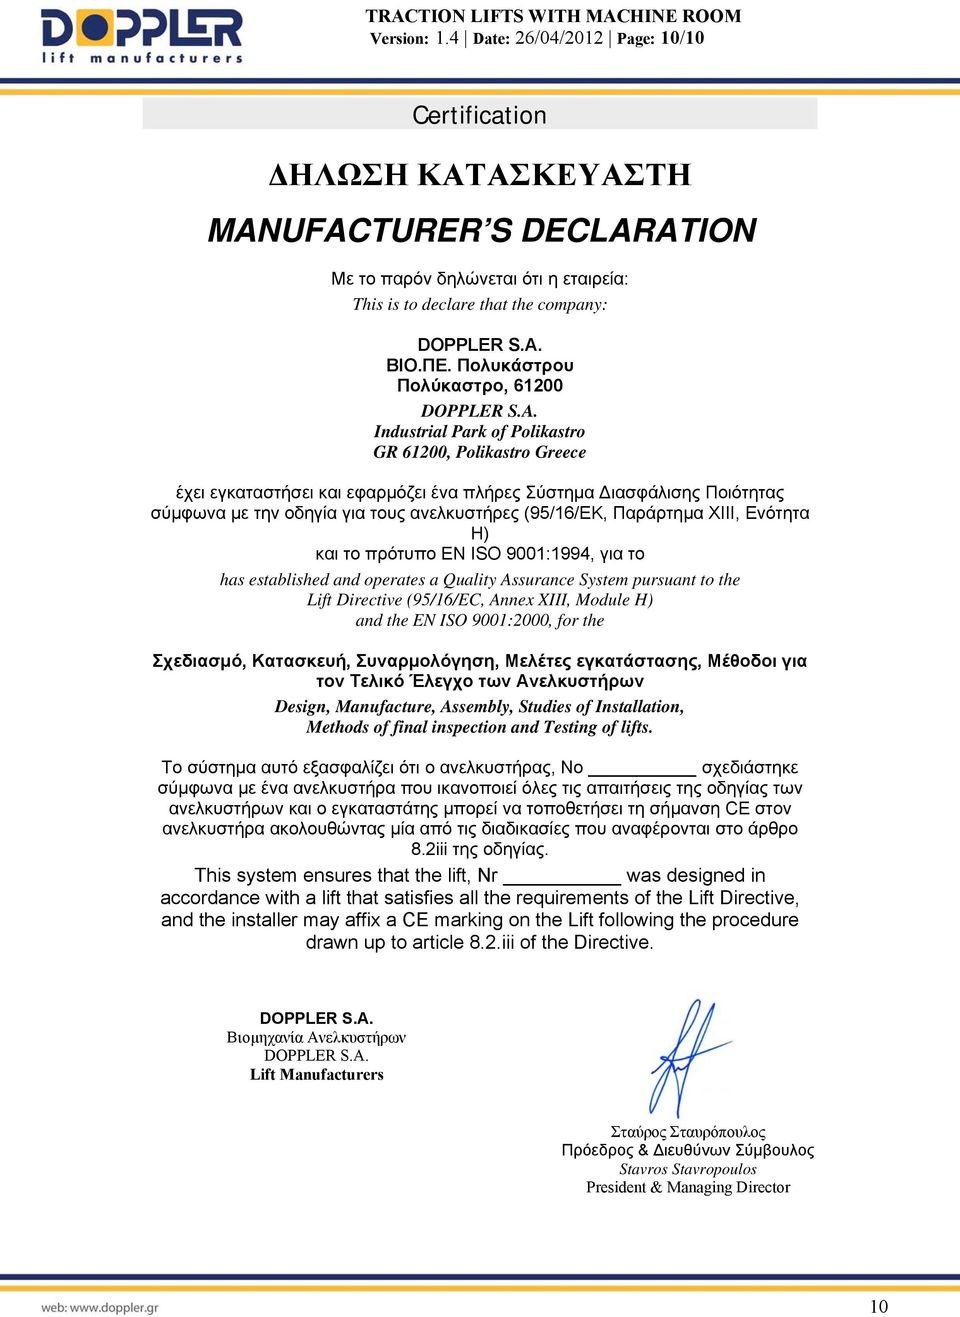 Industrial Park of Polikastro GR 61200, Polikastro Greece έχει εγκαταστήσει και εφαρμόζει ένα πλήρες Σύστημα Διασφάλισης Ποιότητας σύμφωνα με την οδηγία για τους ανελκυστήρες (95/16/ΕΚ, Παράρτημα